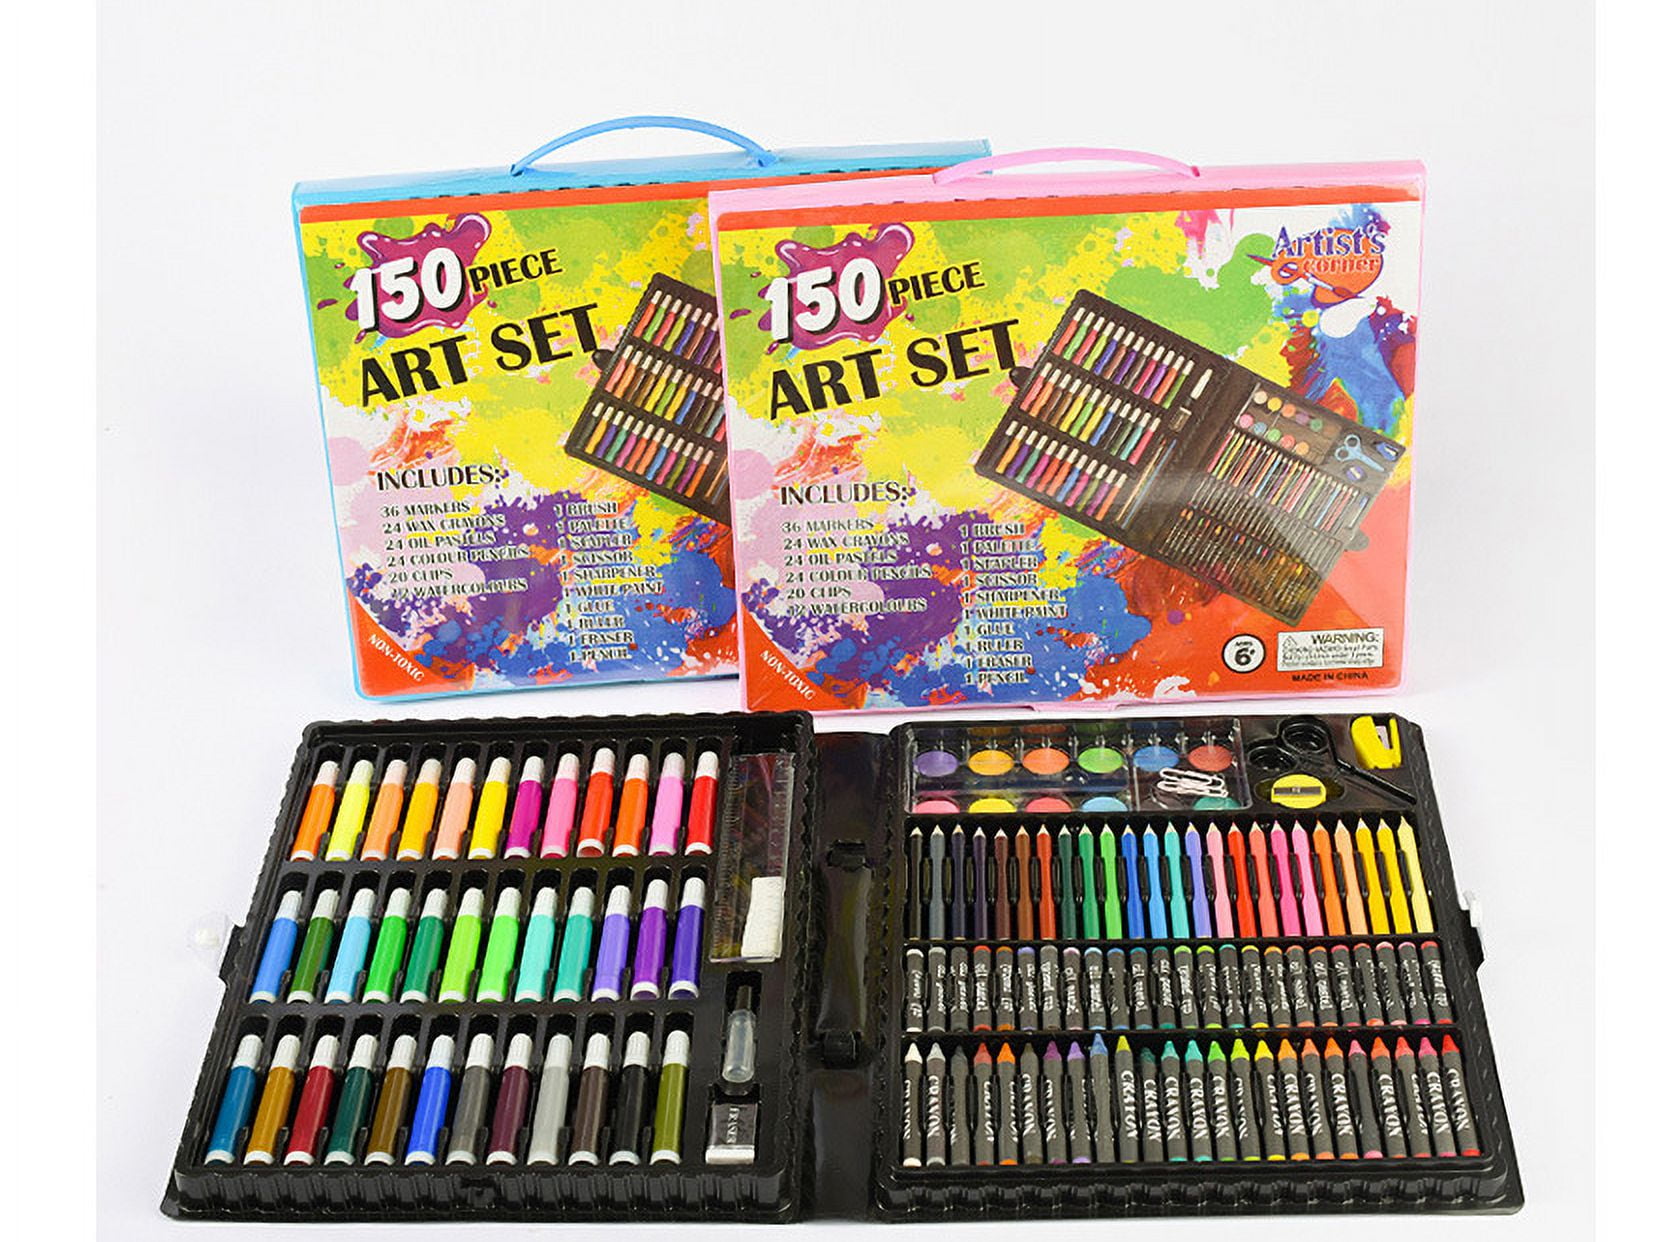 Chainplus Art Set Drawing Supplies Case - 150pcs Kids Art Supplies Coloring Set for Ages 7 8 9 10 11 12 Artist Drawing Kits for Girls Boys School